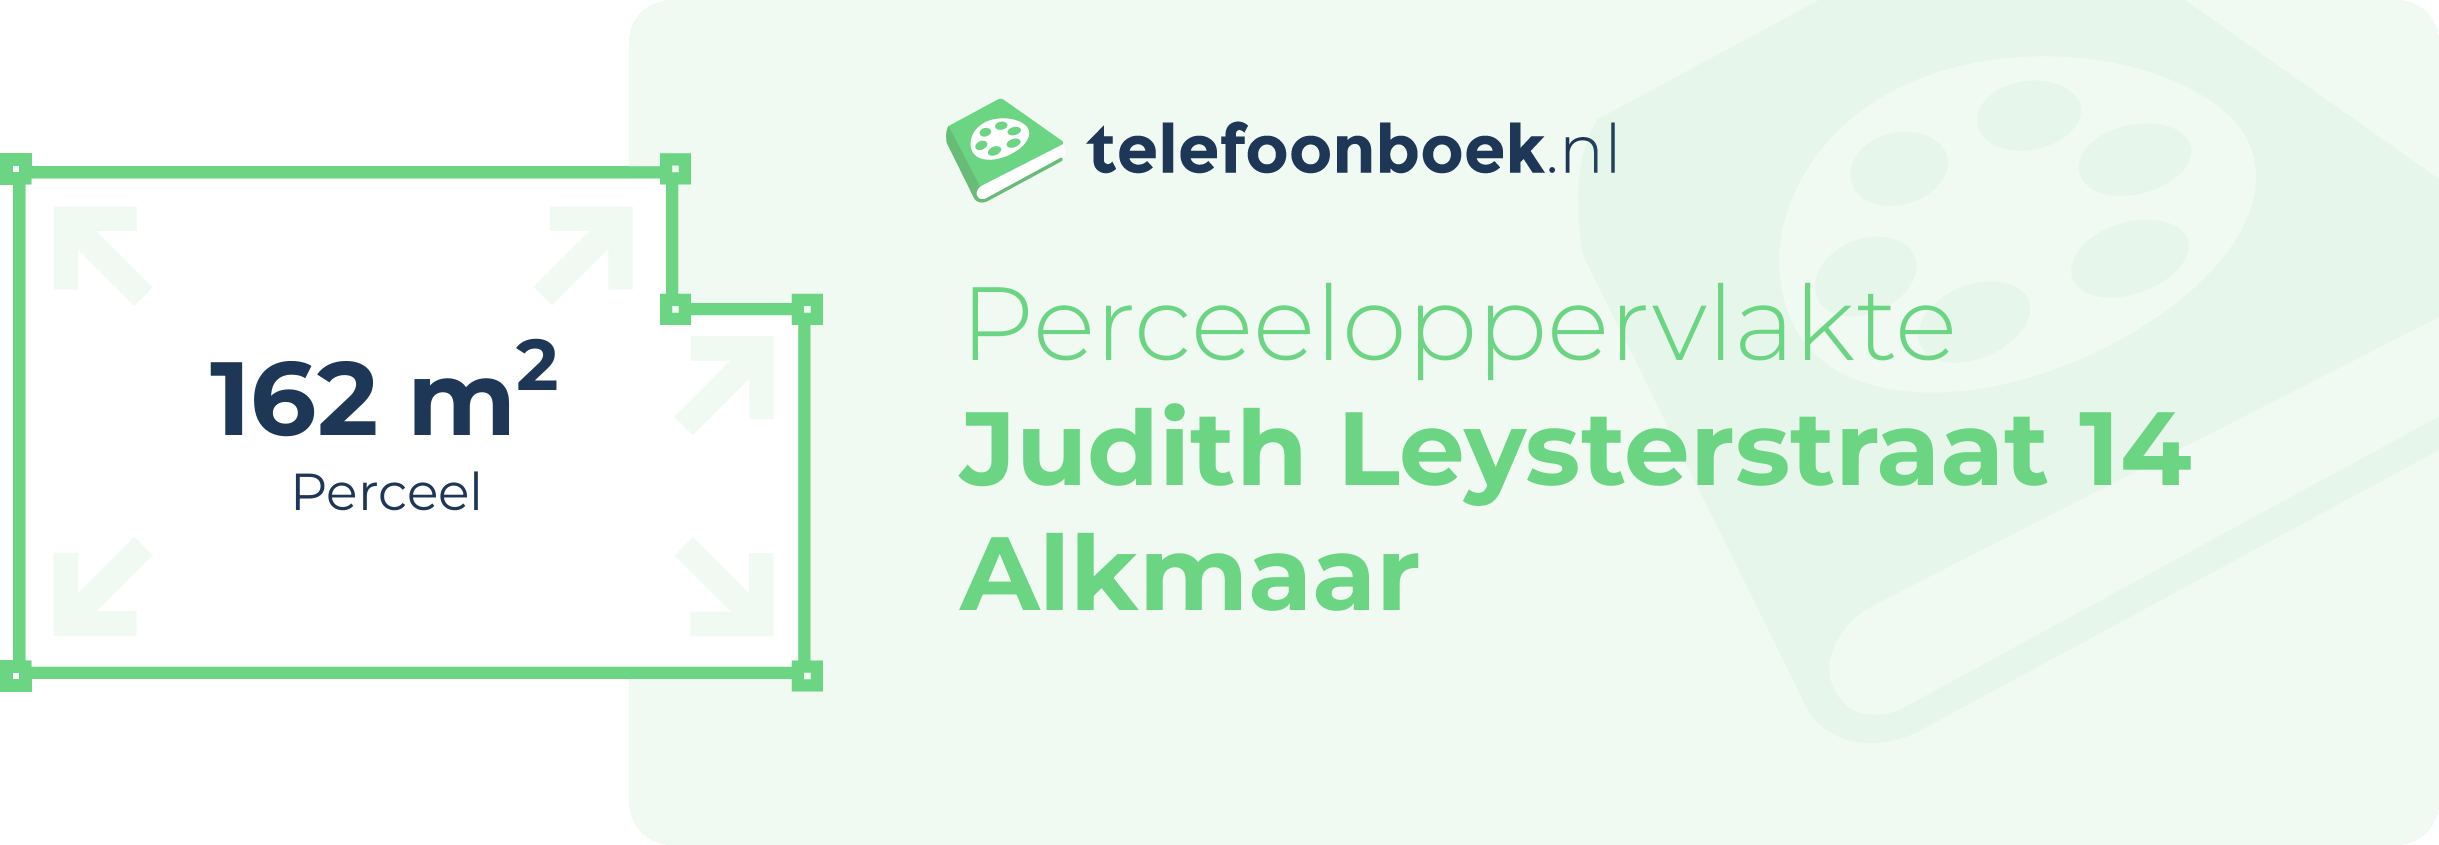 Perceeloppervlakte Judith Leysterstraat 14 Alkmaar